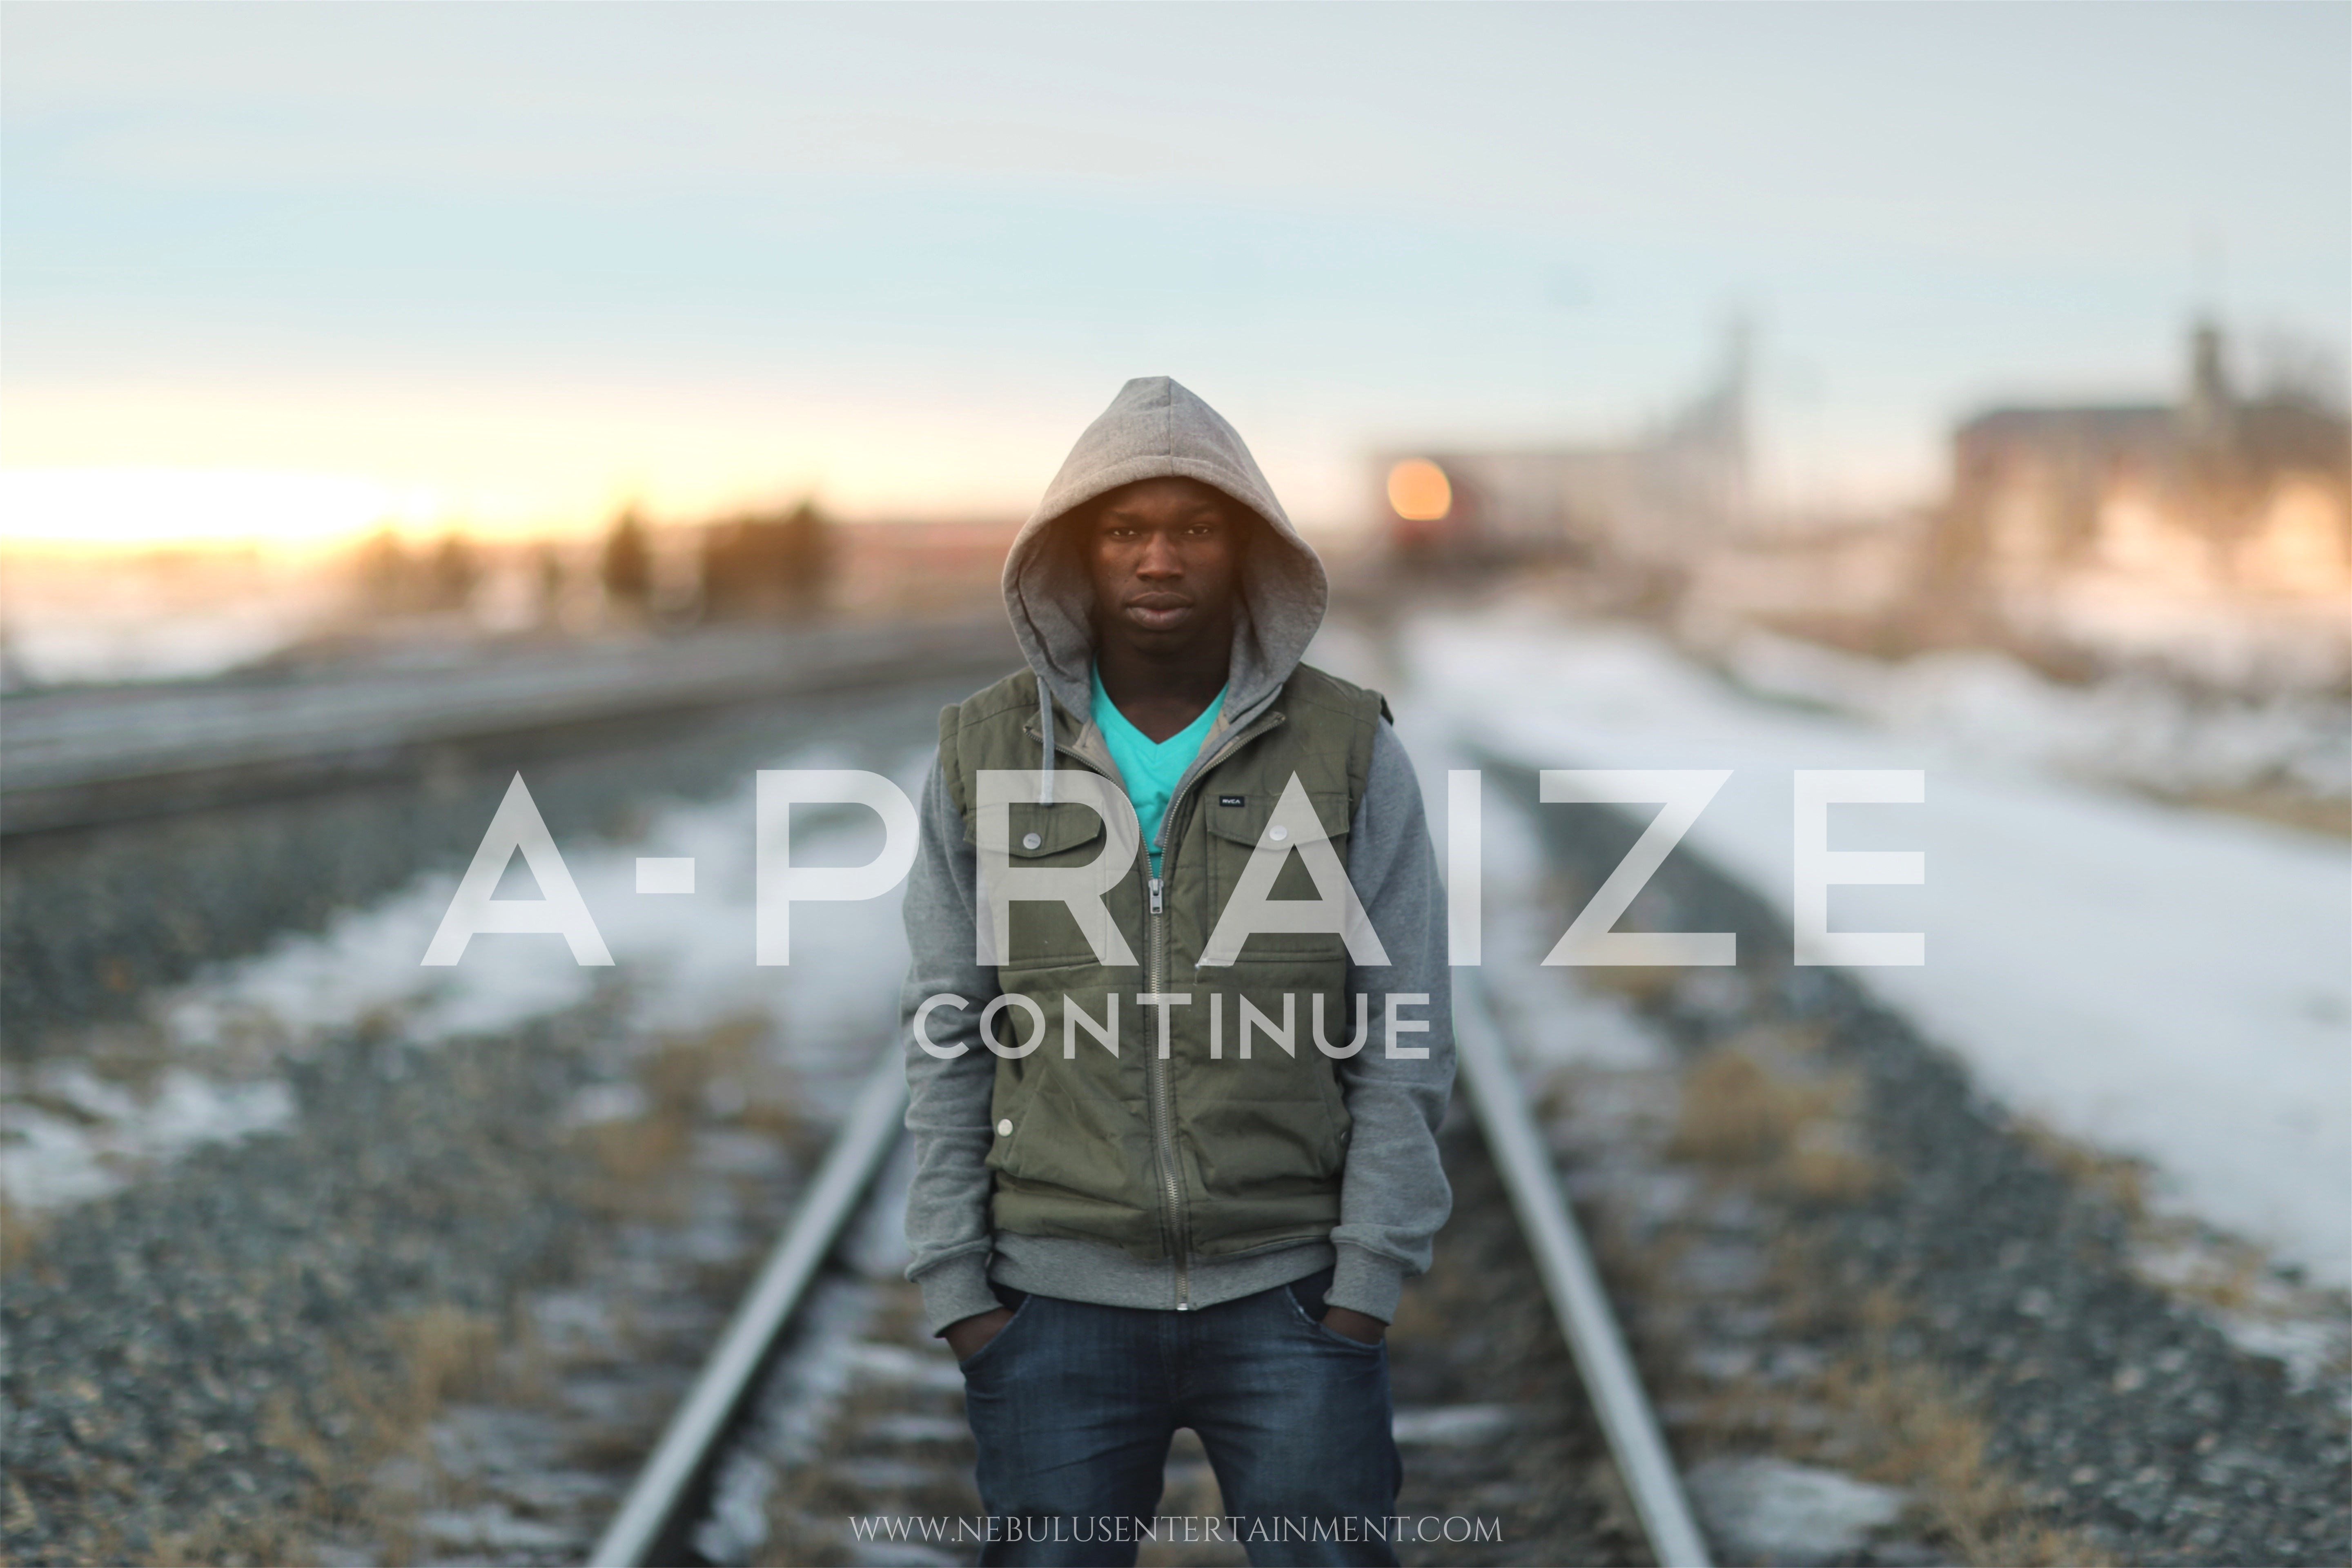 A-Praize Promotional Photography 